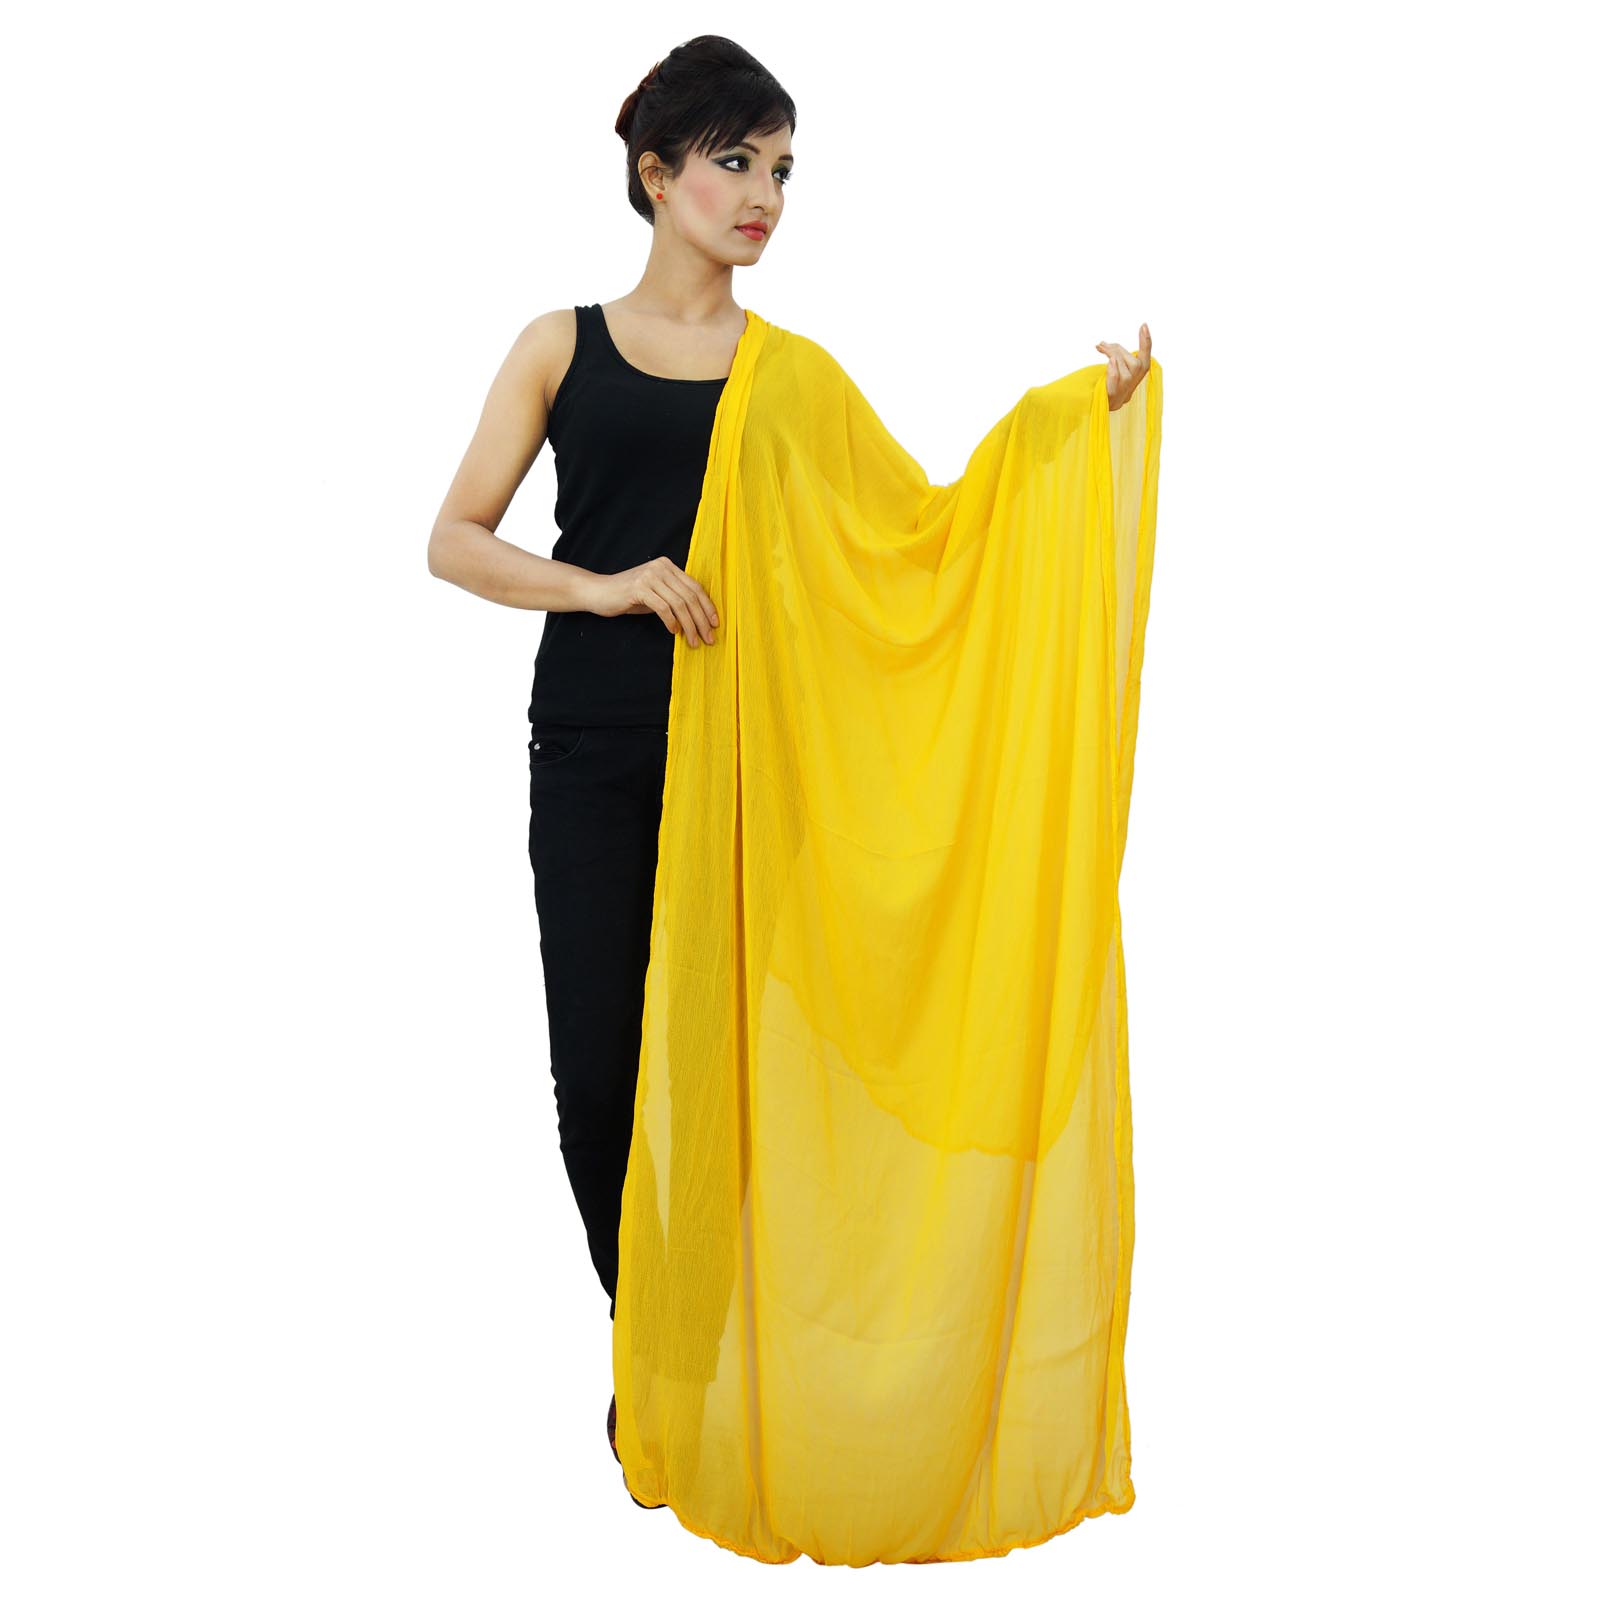 Chiffon Blend Dupatta Long Stole Women Neck Wrap Indian Scarves-3bW | eBay